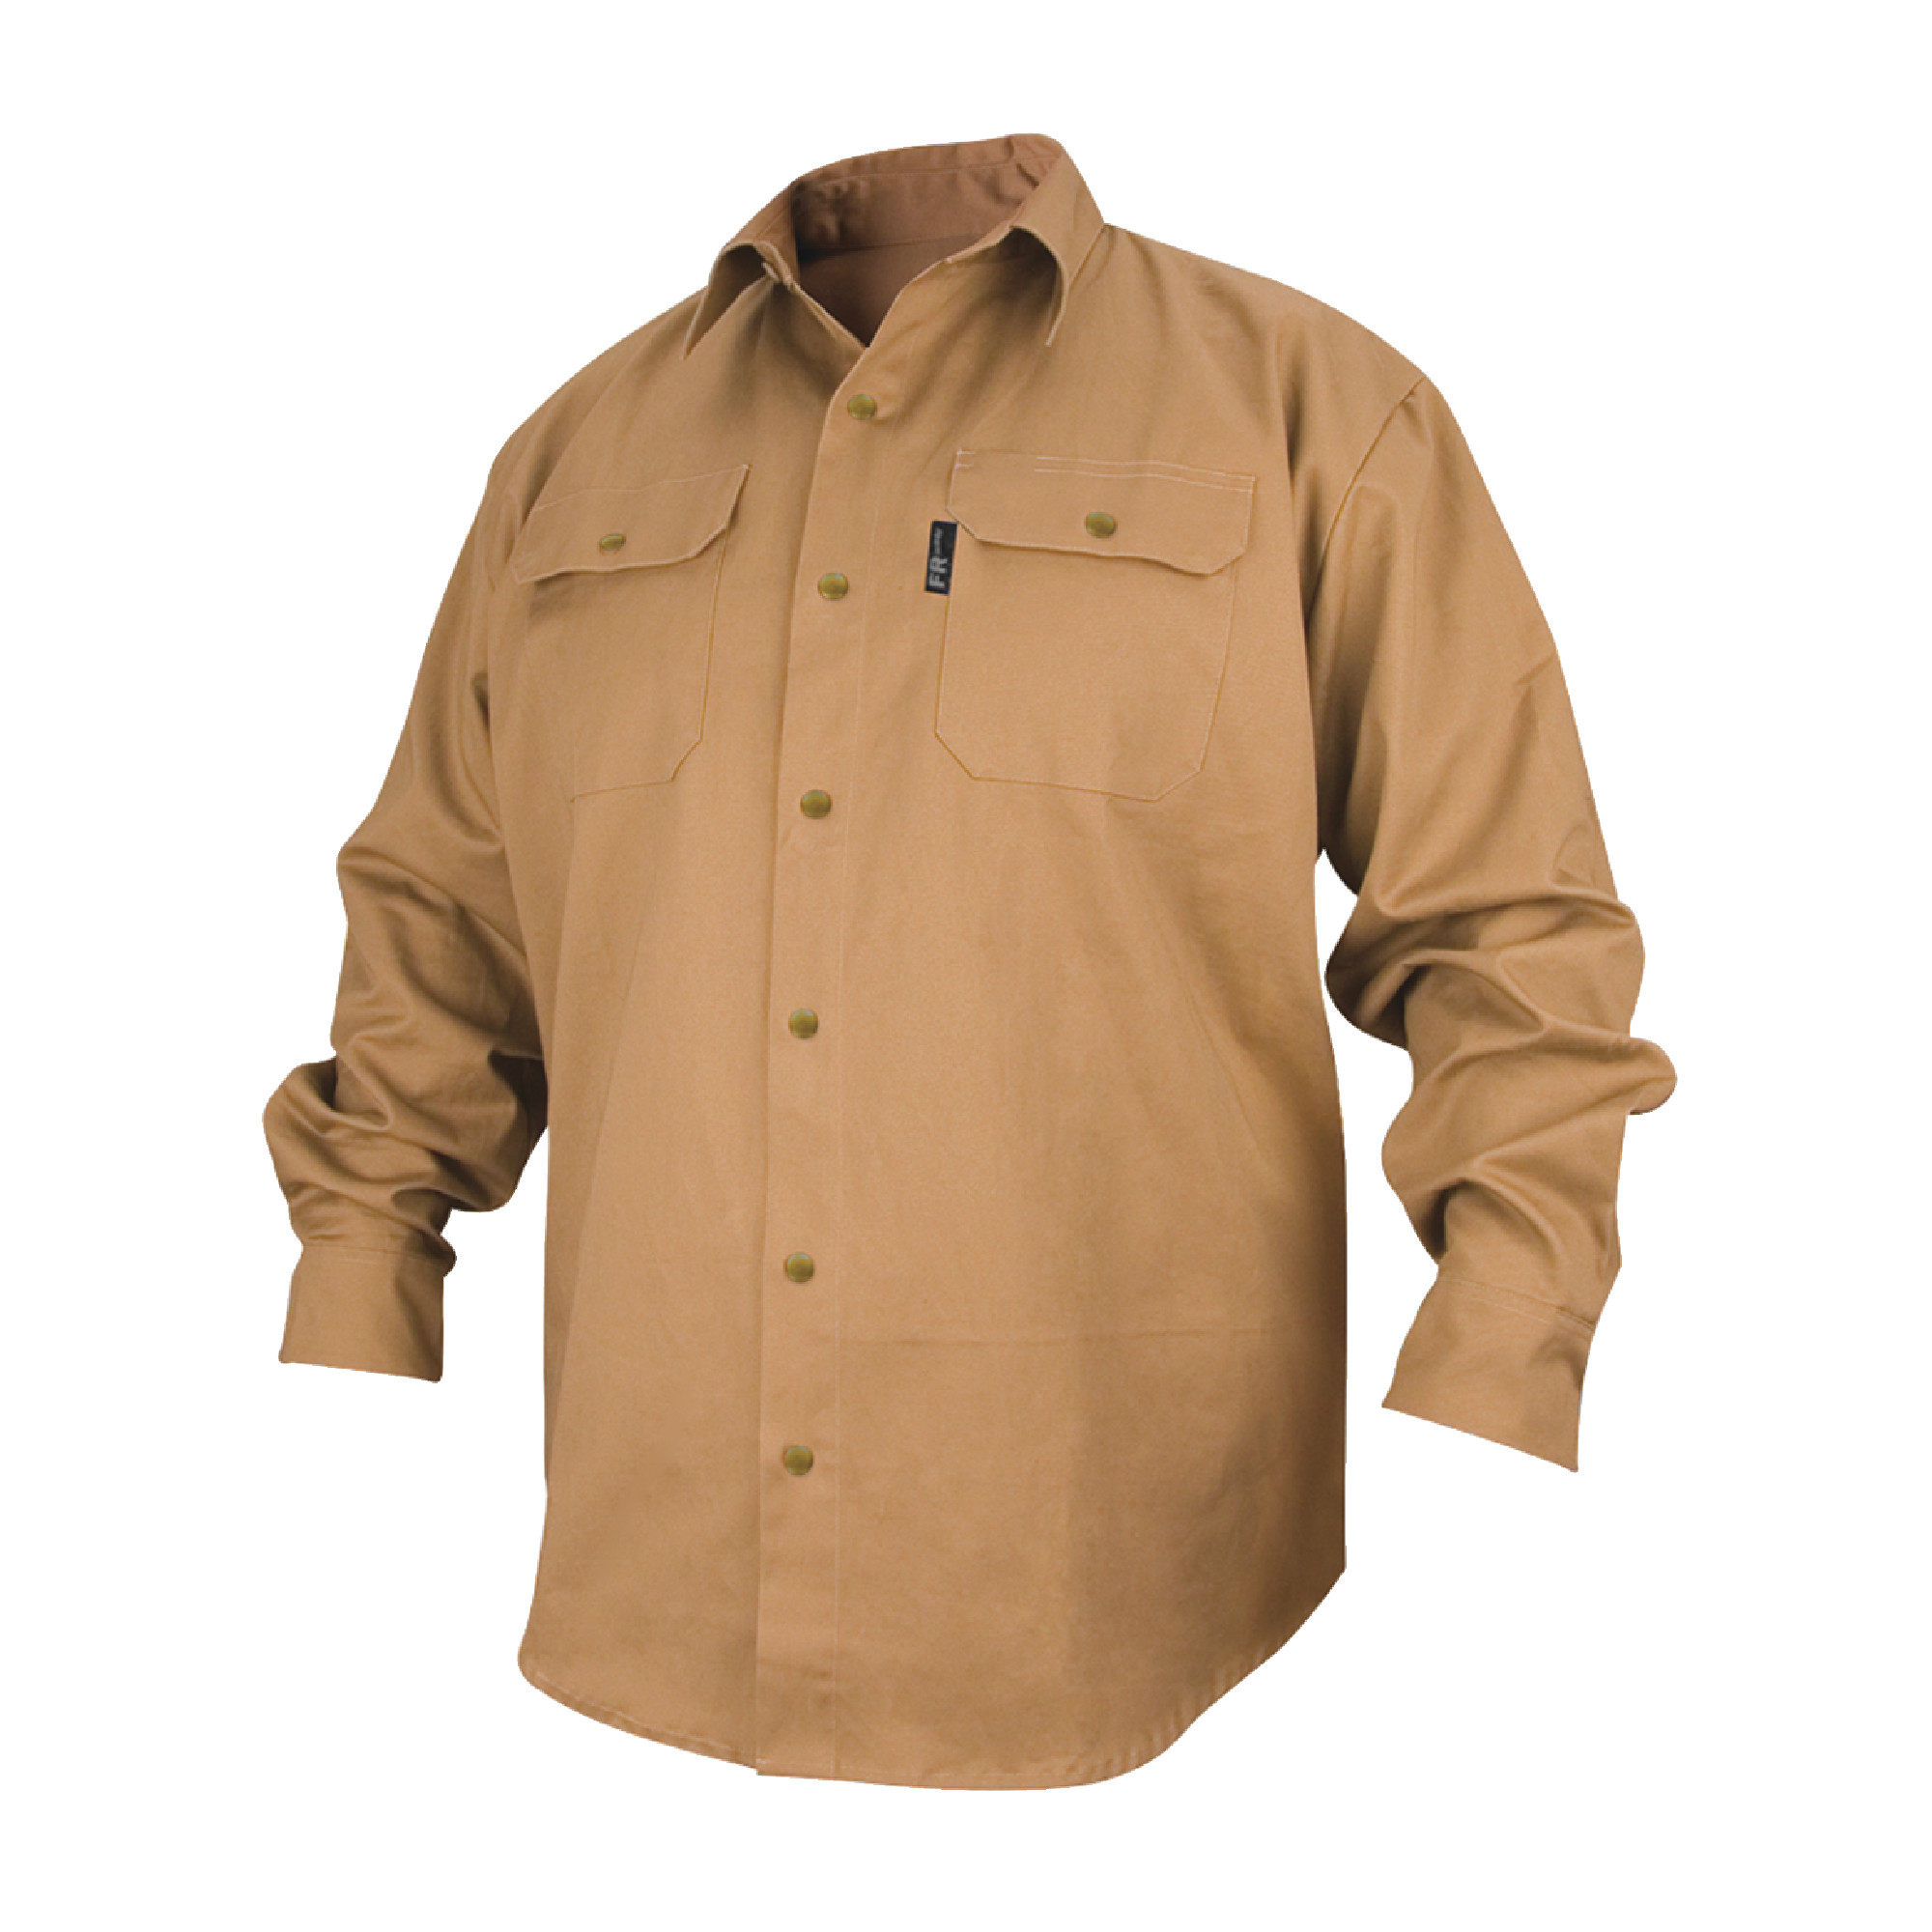 Black Stallion Khaki Fire Resistant Cotton Welding Shirt - Size XL